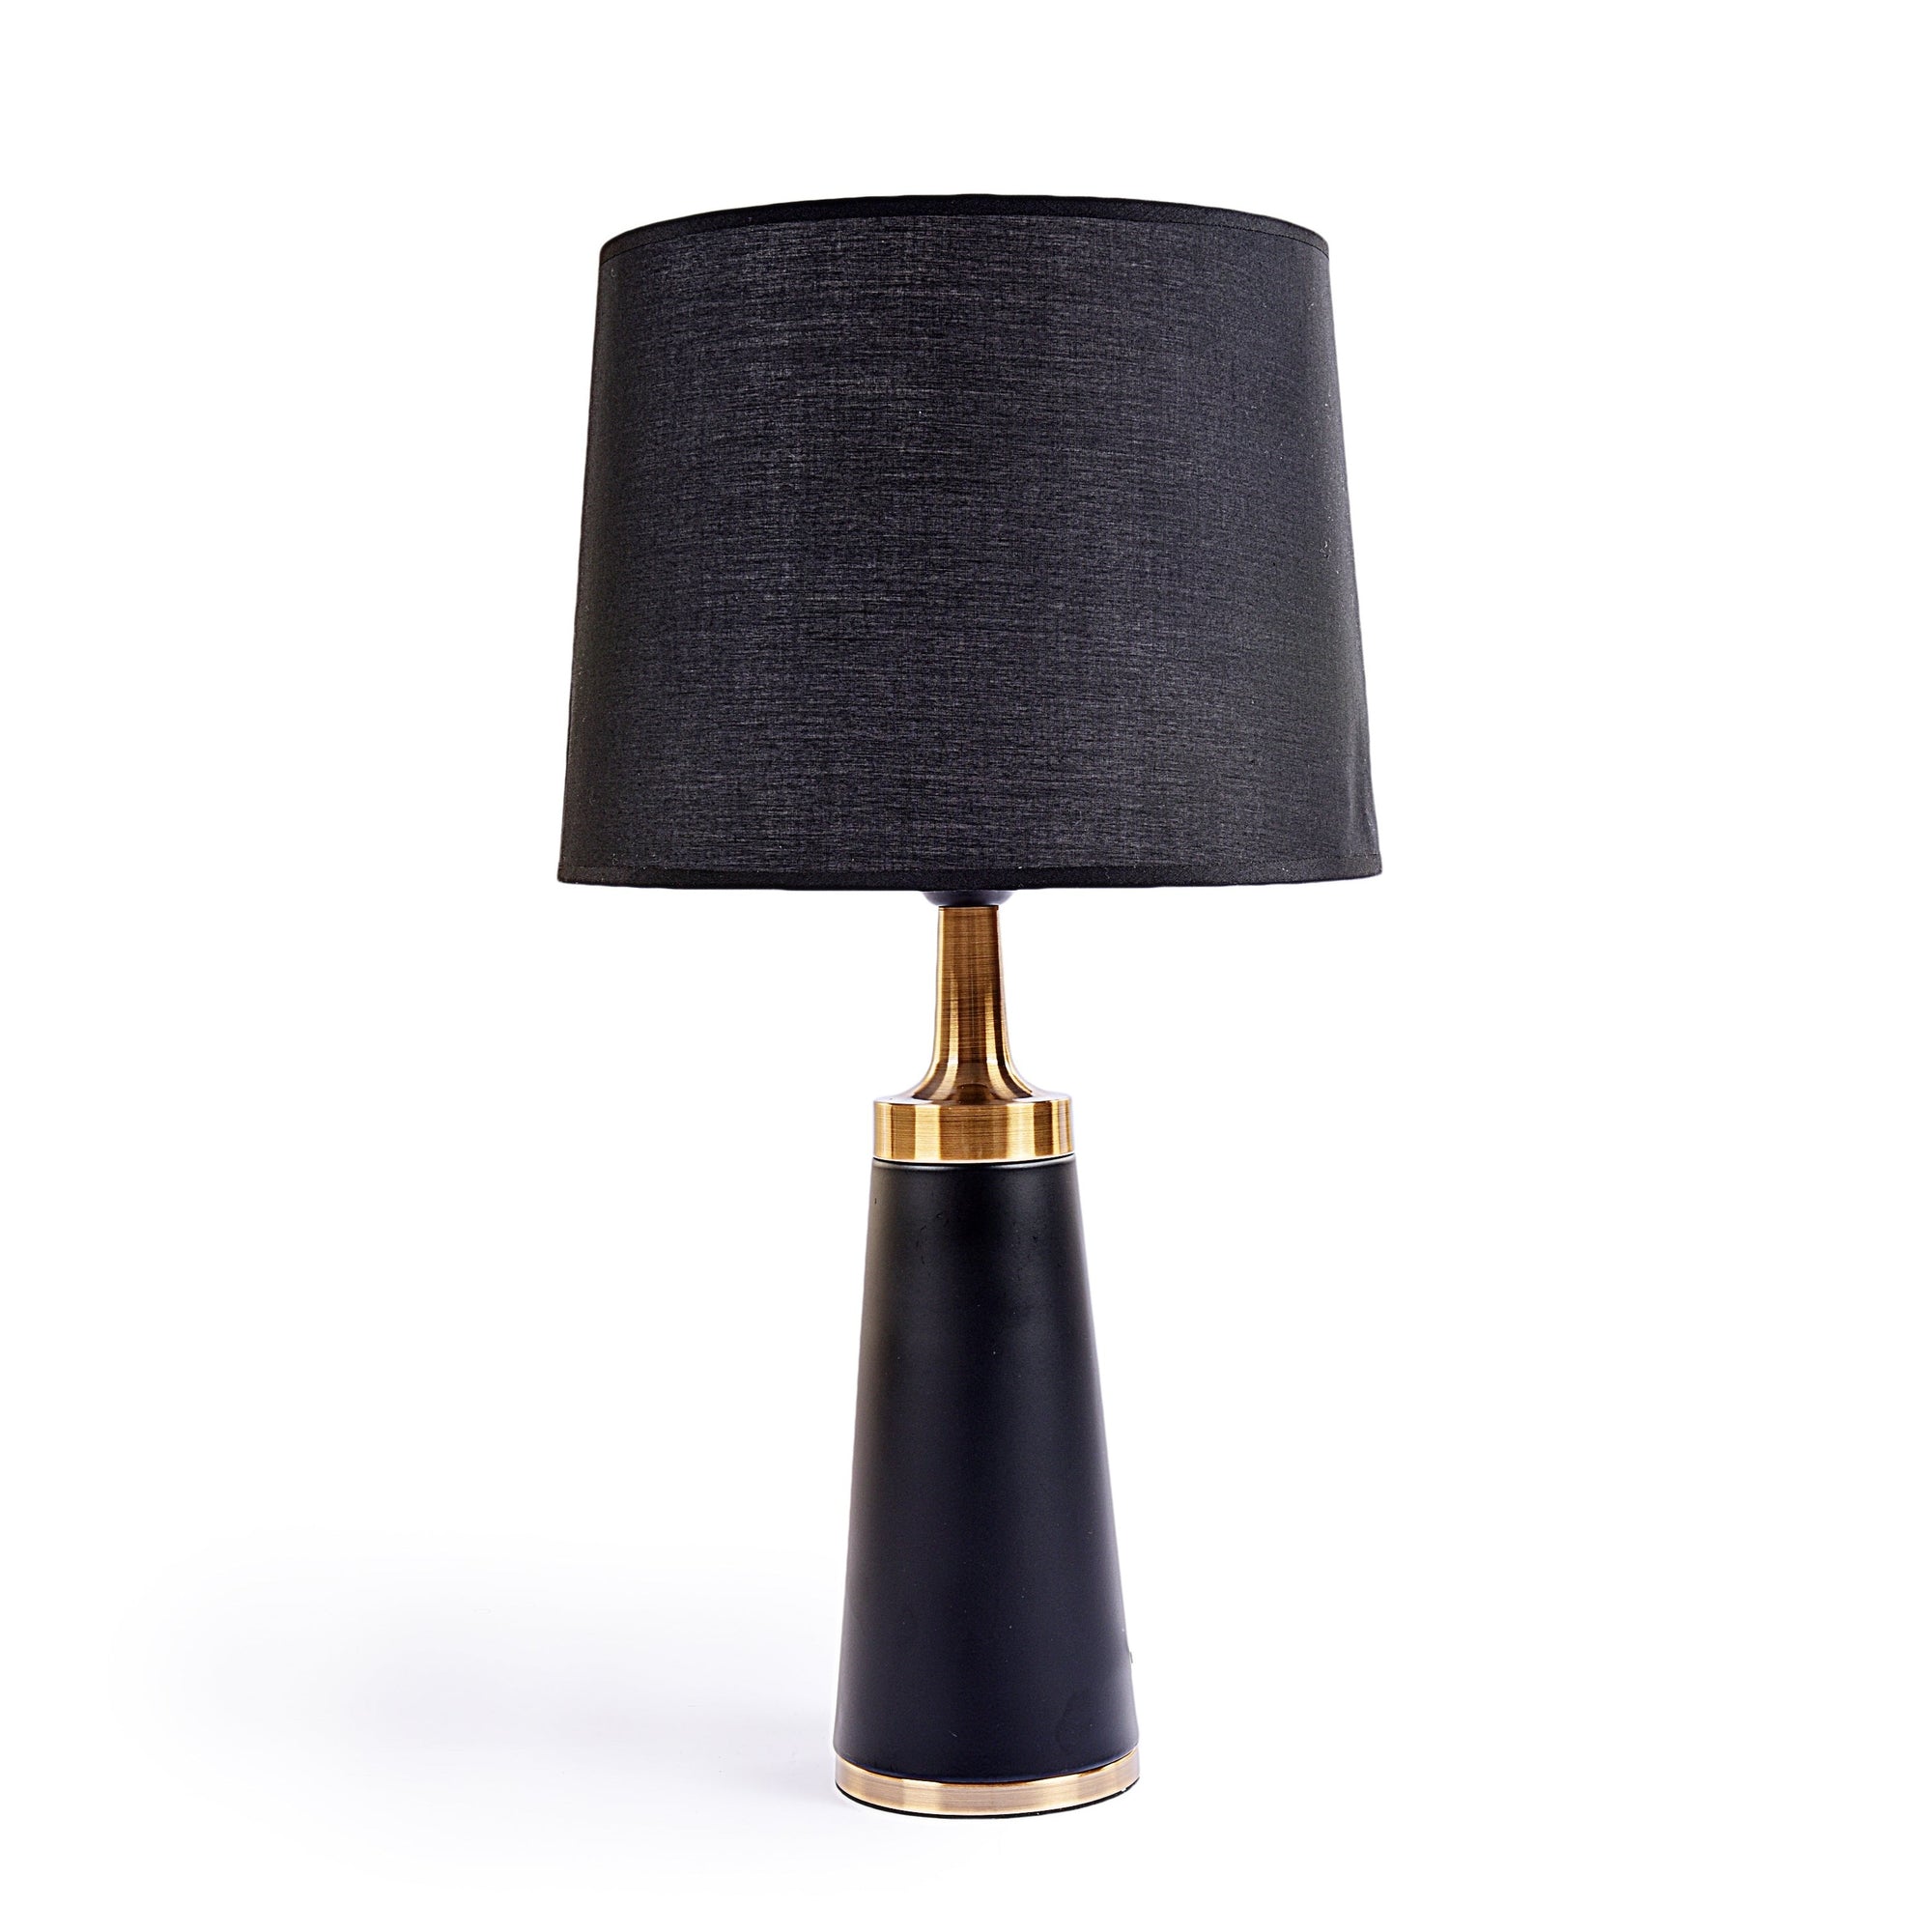 Matt Black Brass Table Lamp